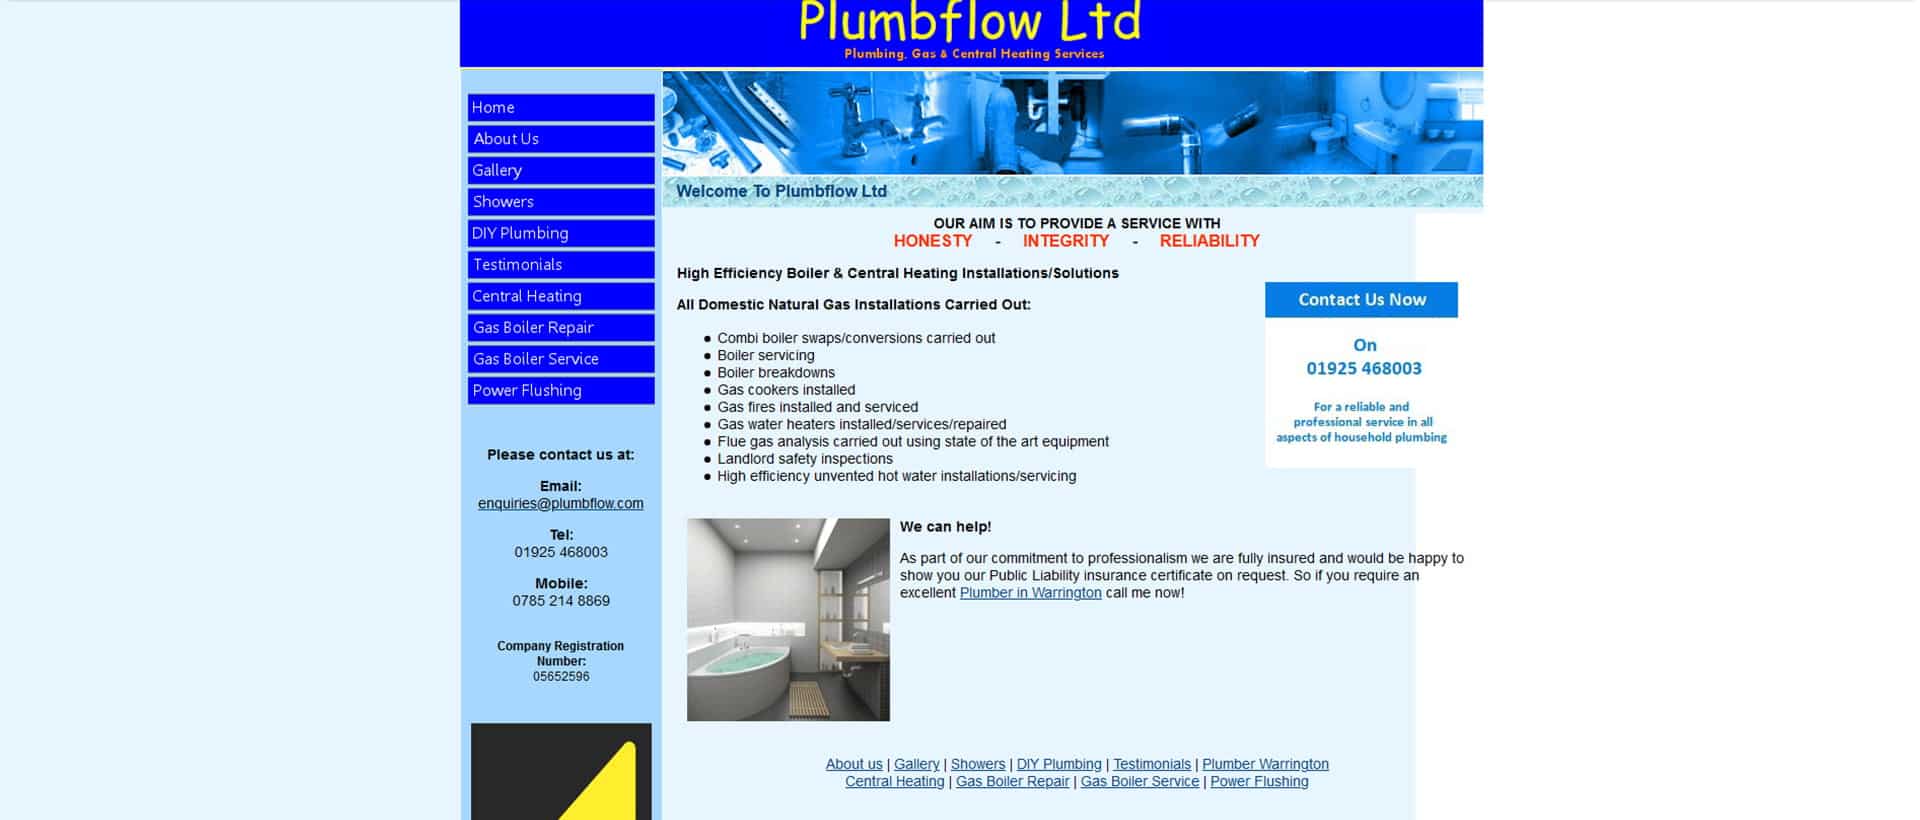 BWS_Plumbflow Ltd-Before